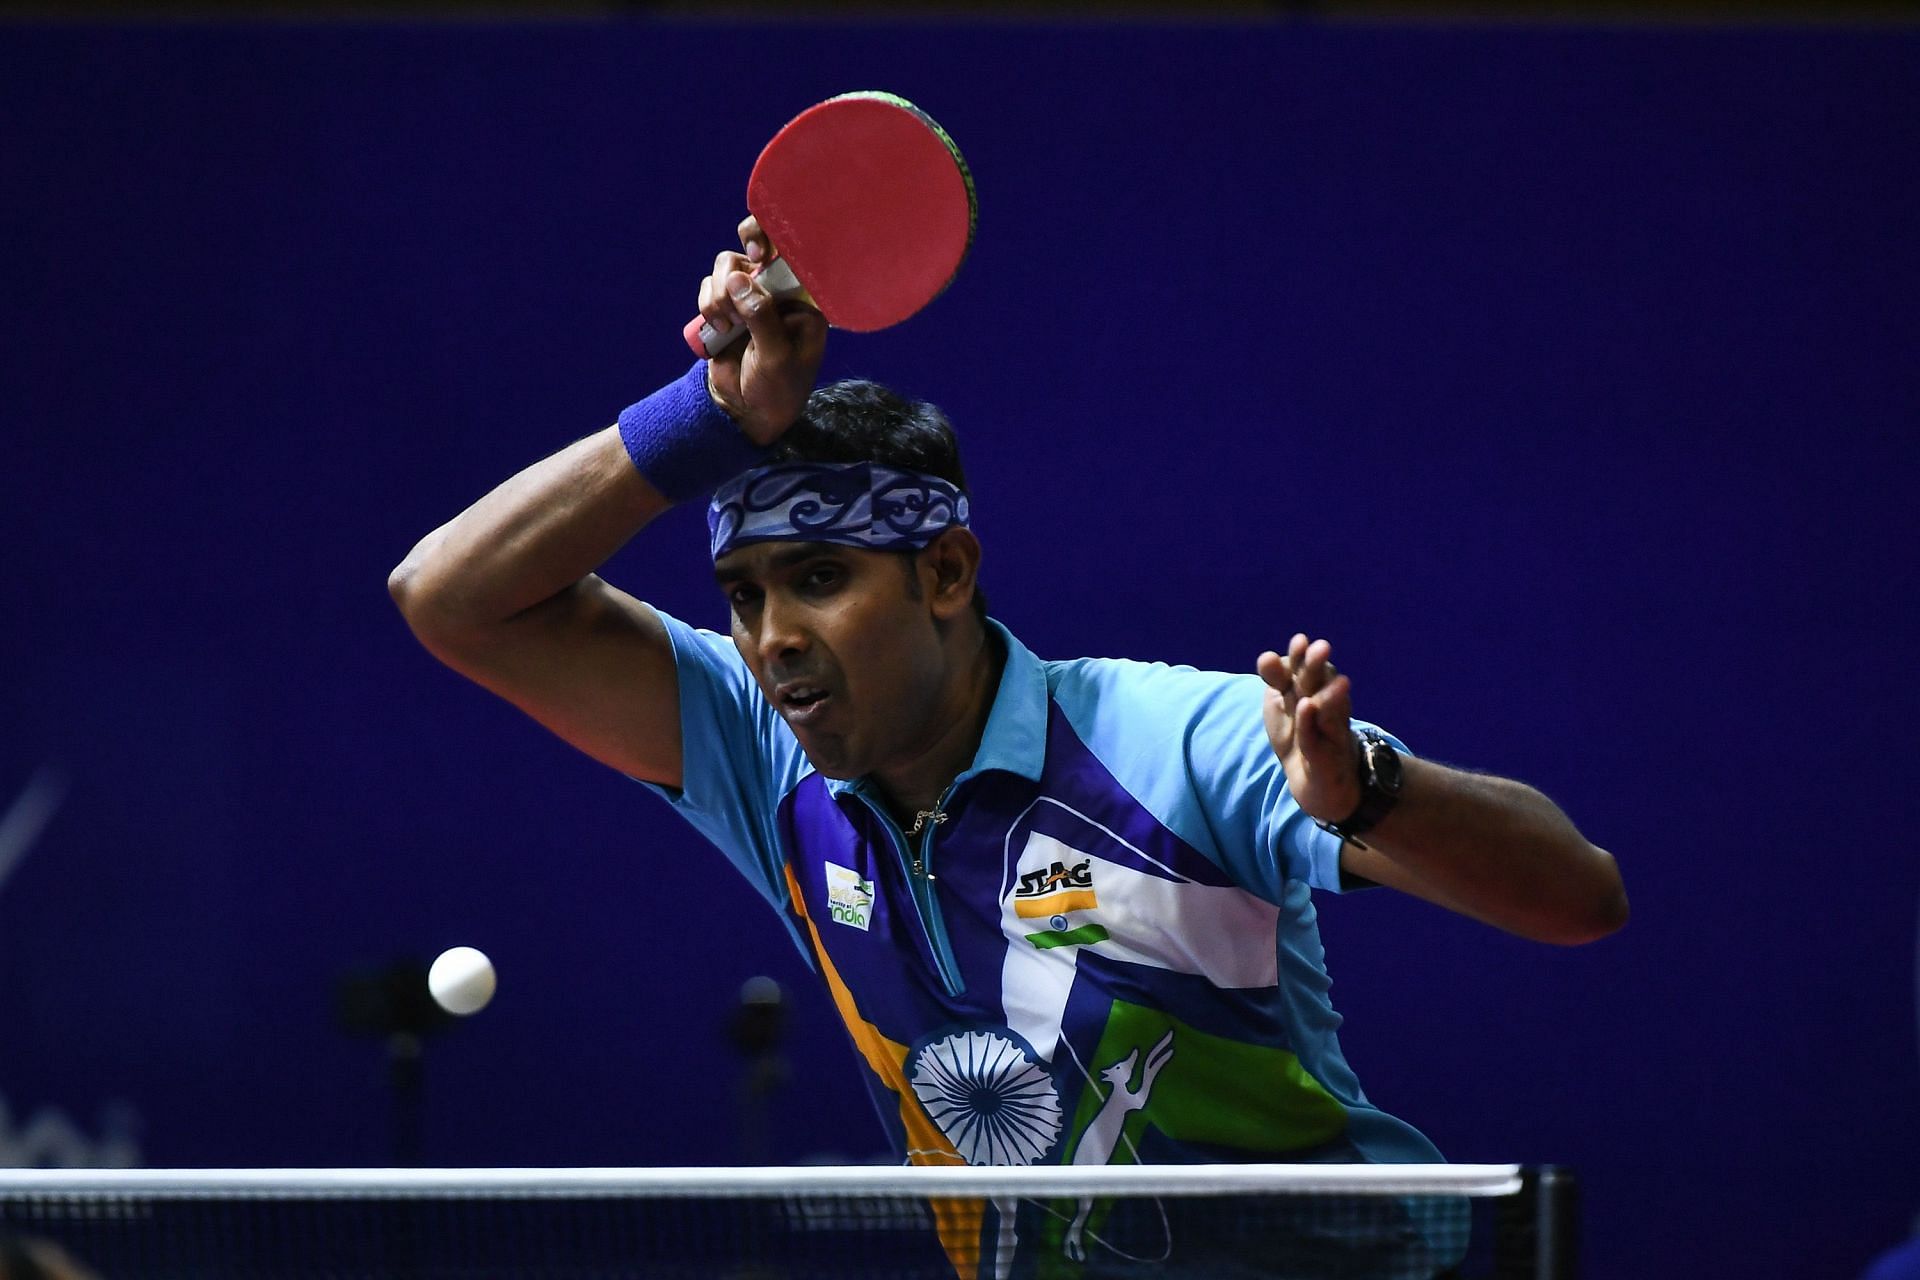 Achanta Sharath Kamal at the Asian Table Tennis Championships. (PC: Getty Images)